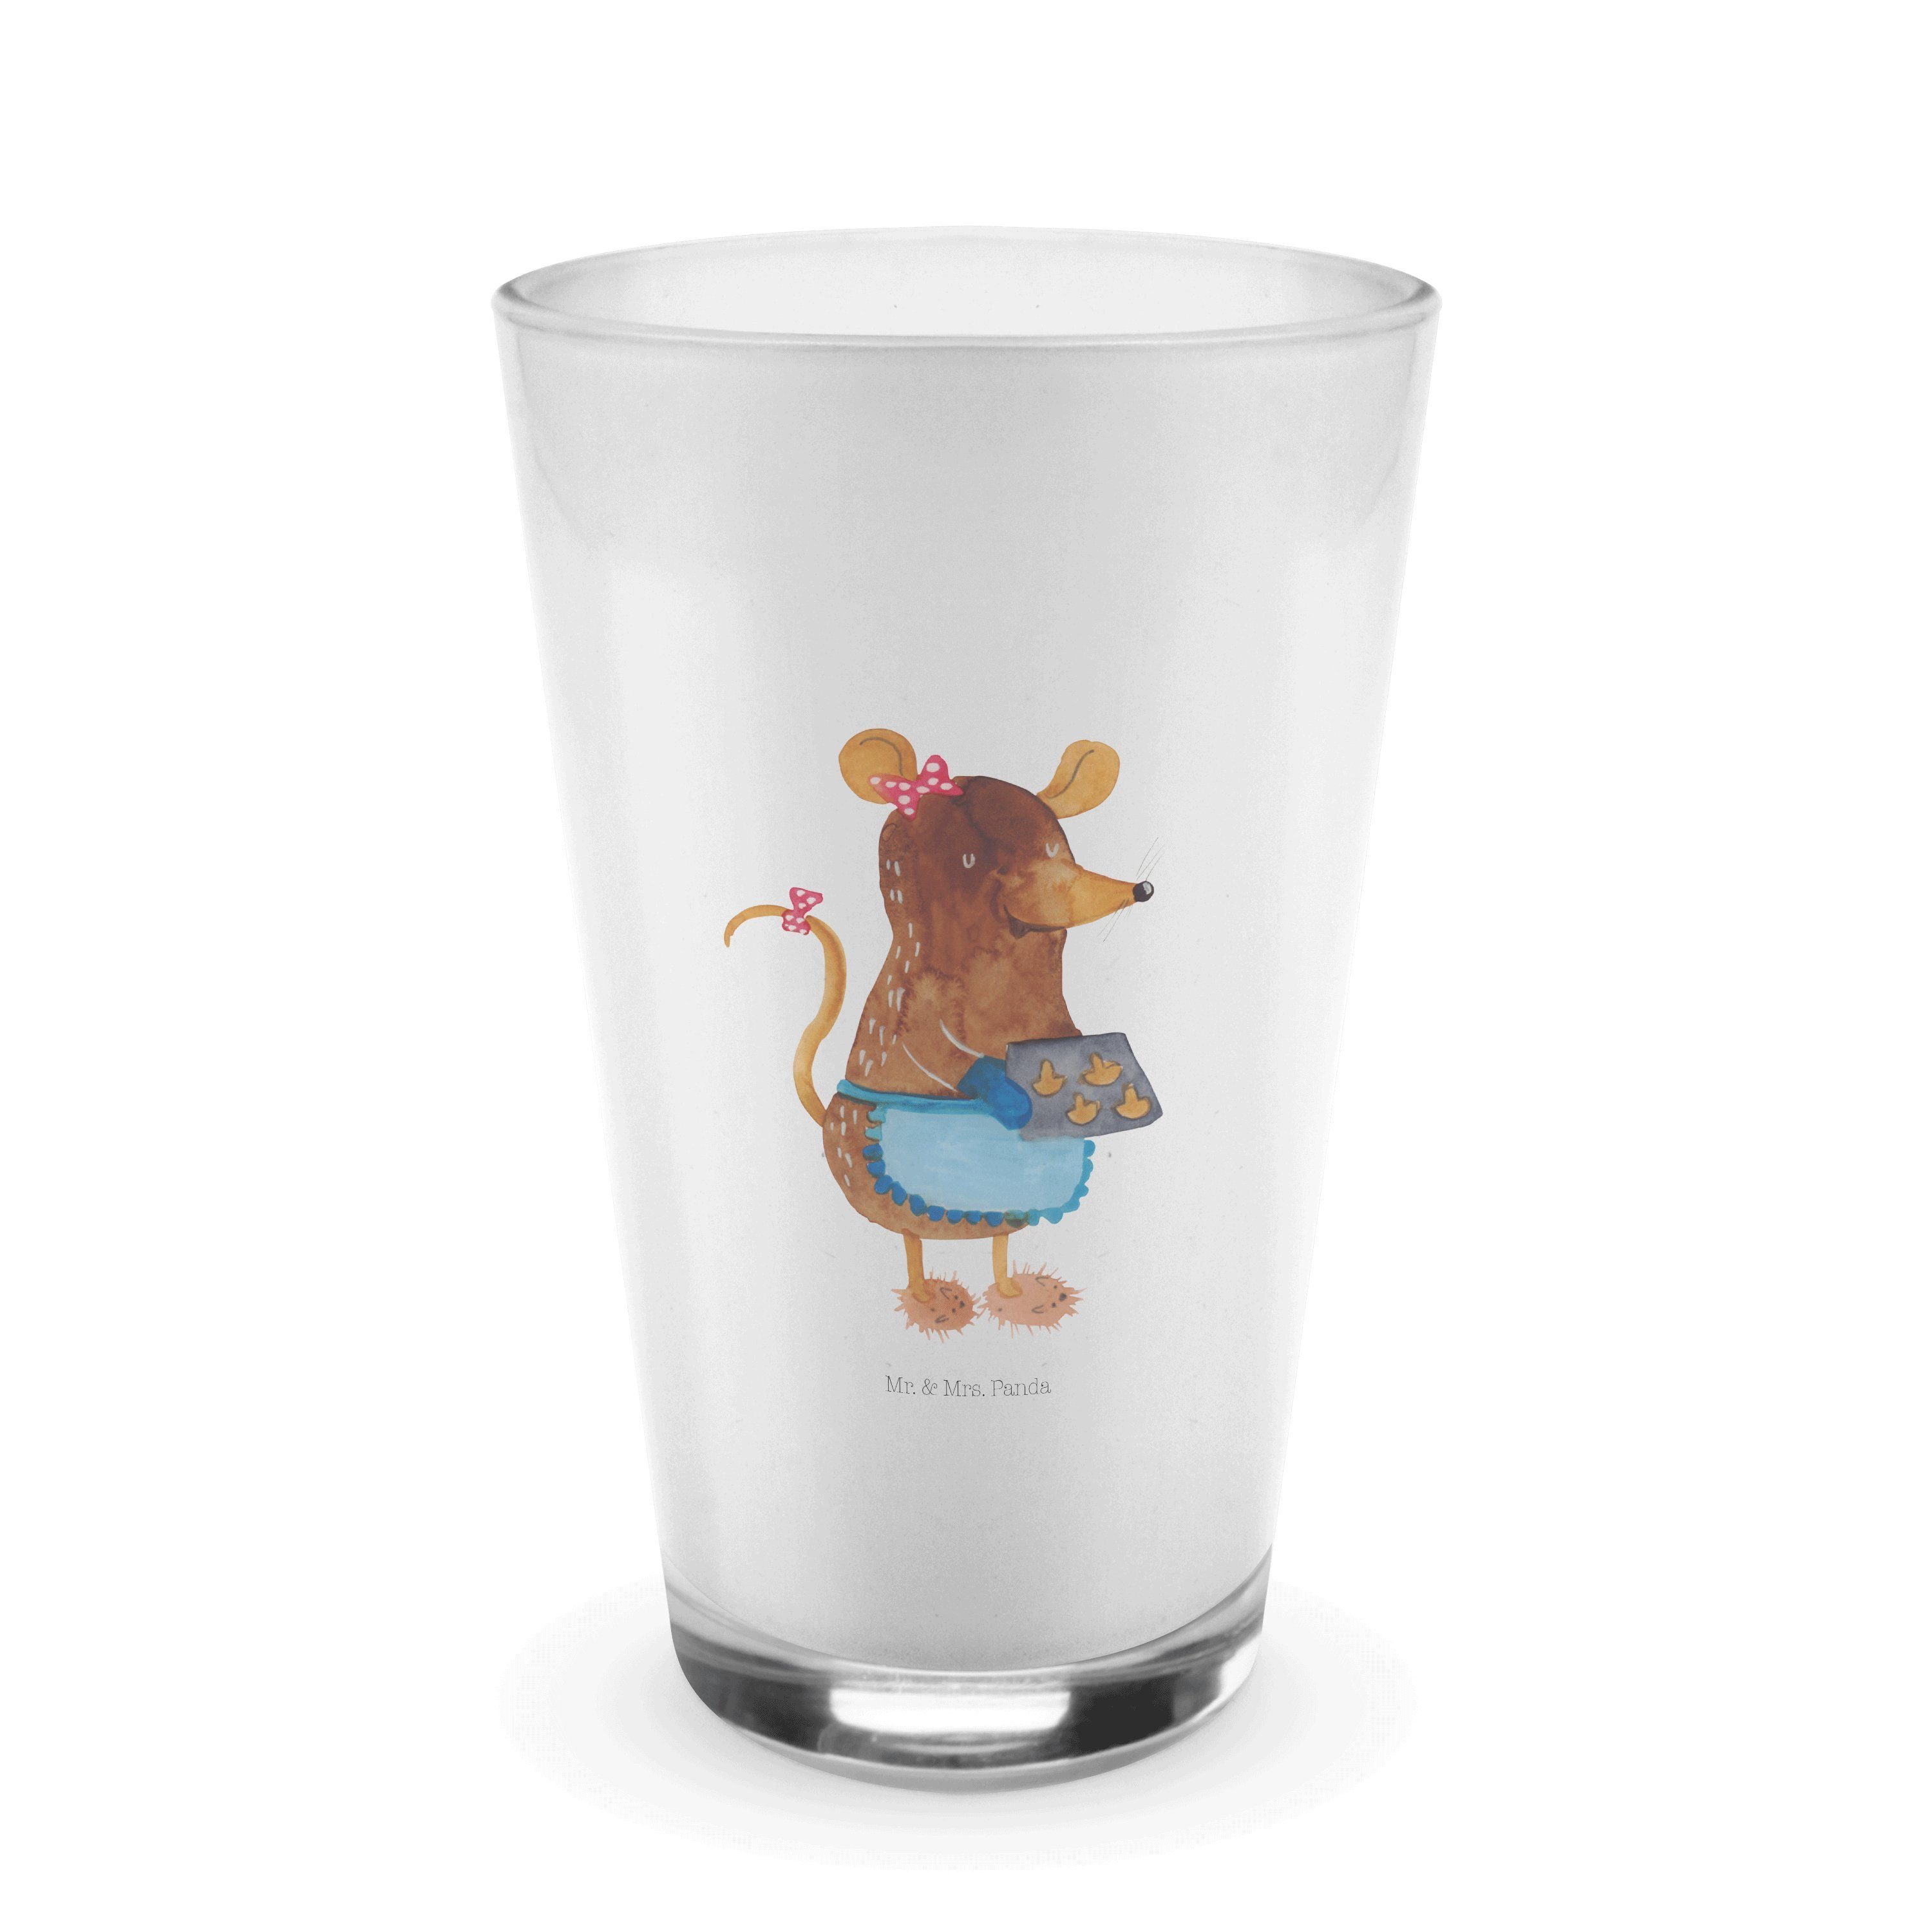 Mr. & Mrs. Panda Glas Maus Kekse - Transparent - Geschenk, Winter, Cappuccino Glas, Plätzch, Premium Glas